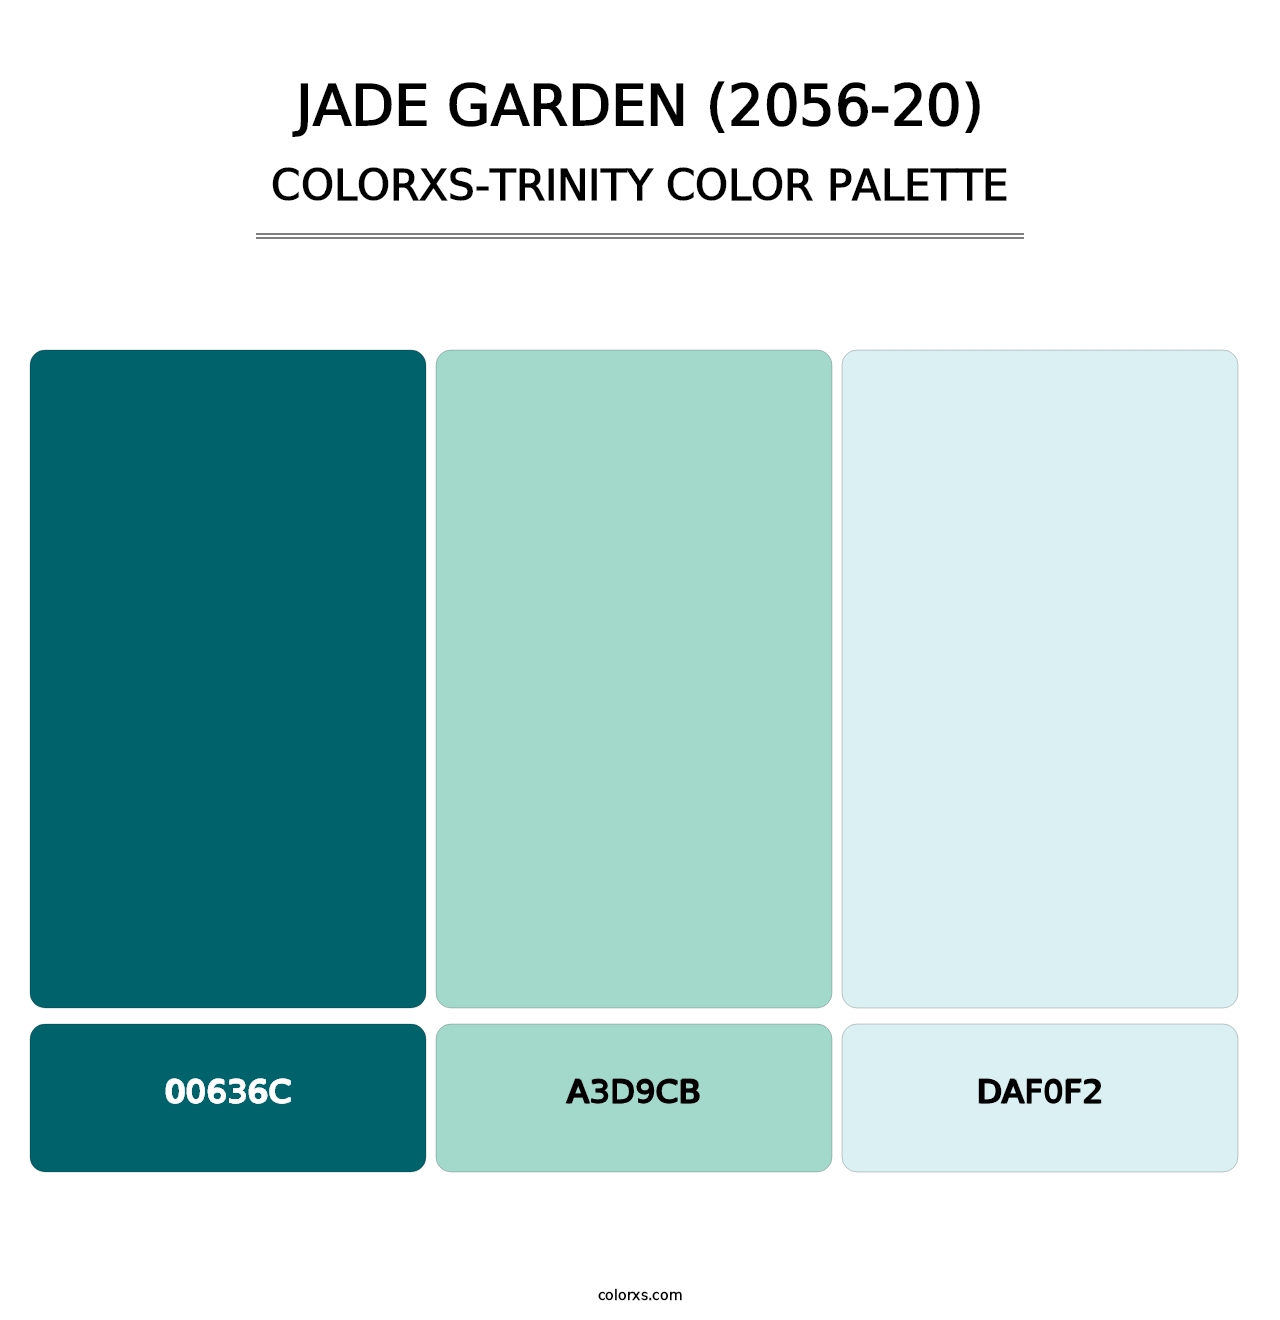 Jade Garden (2056-20) - Colorxs Trinity Palette